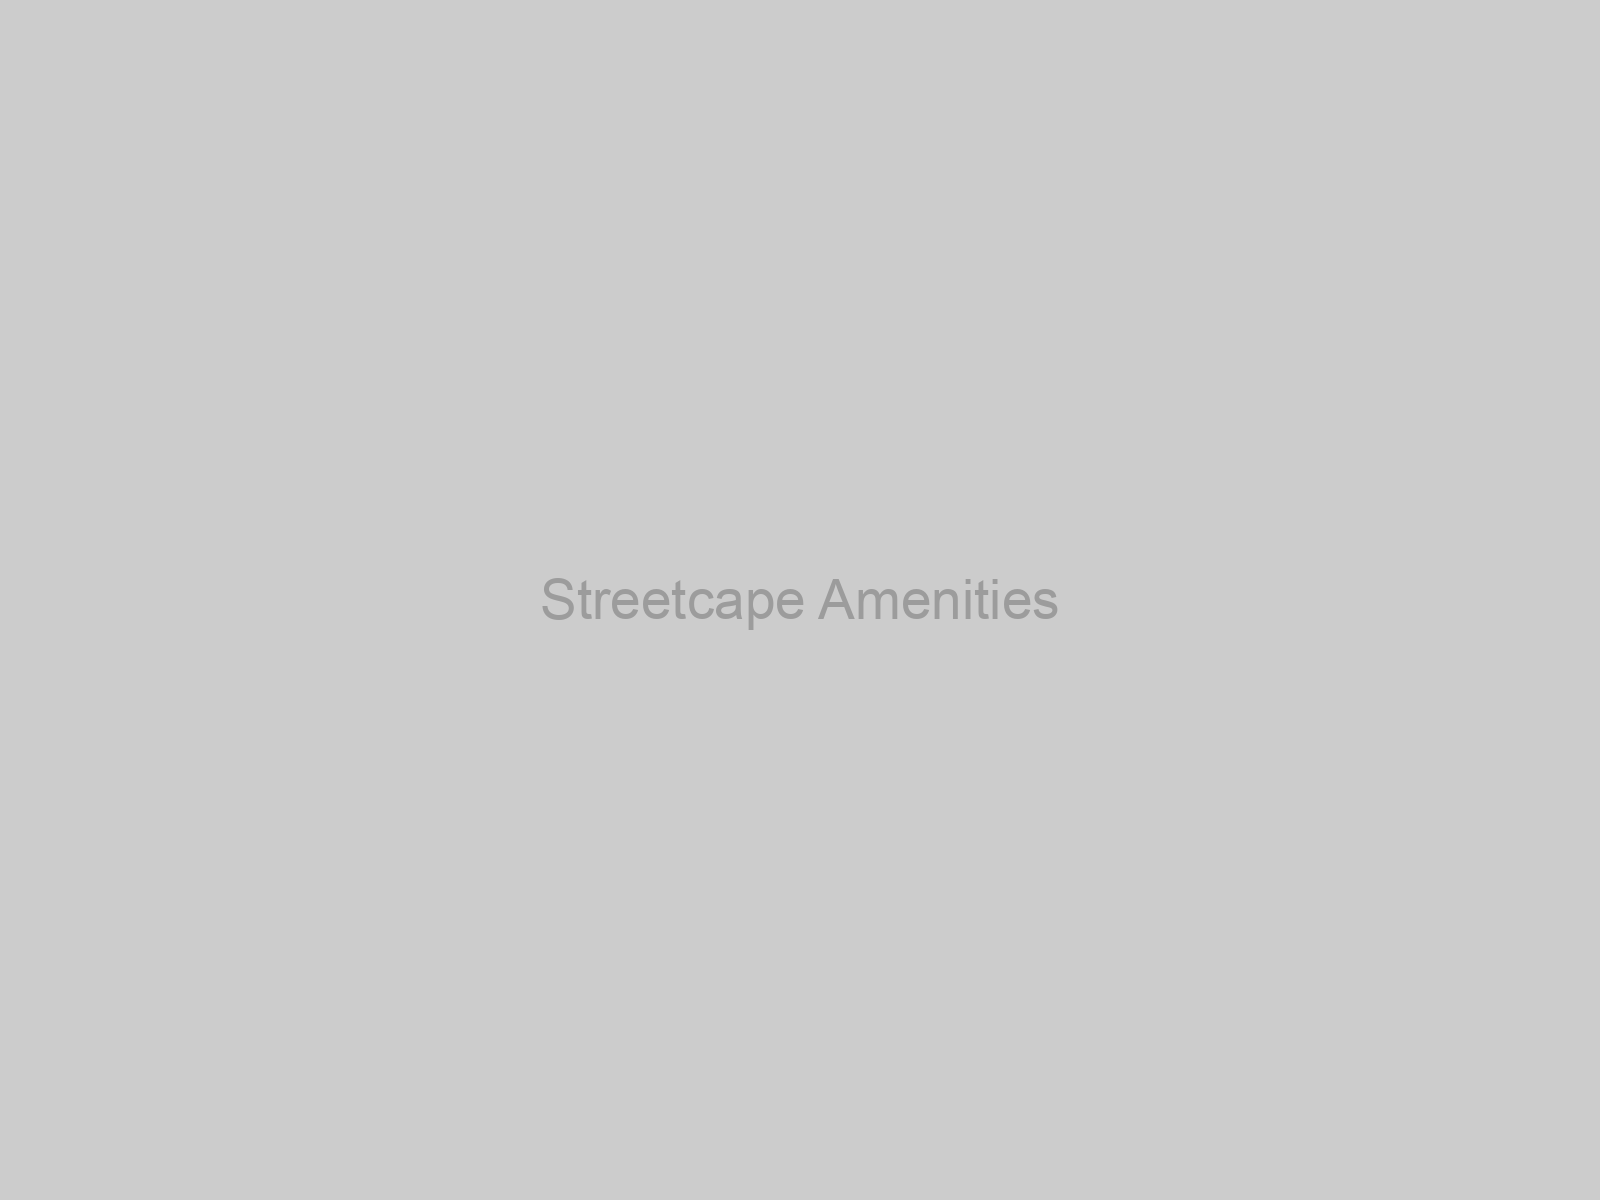 Streetcape Amenities